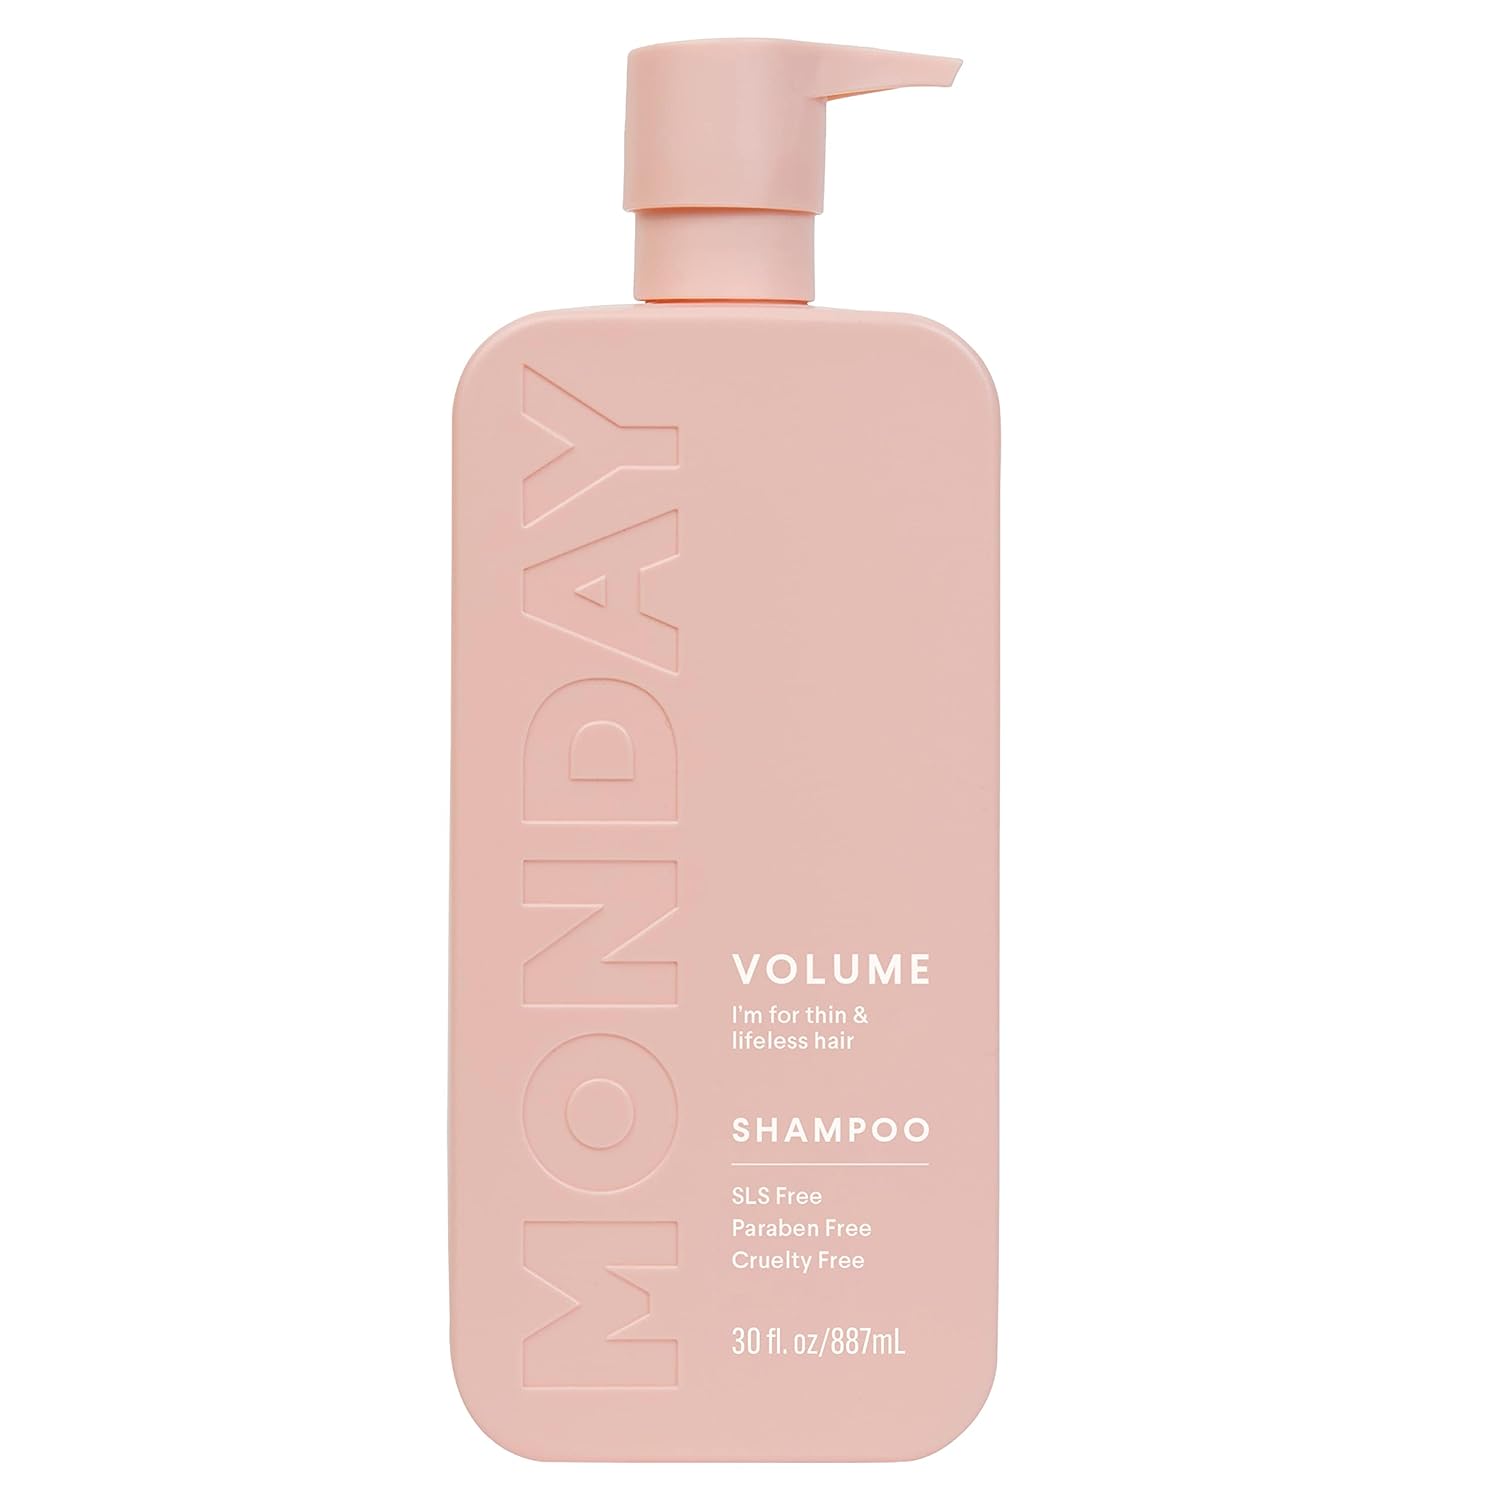 MONDAY HAIRCARE Volume Shampoo Review